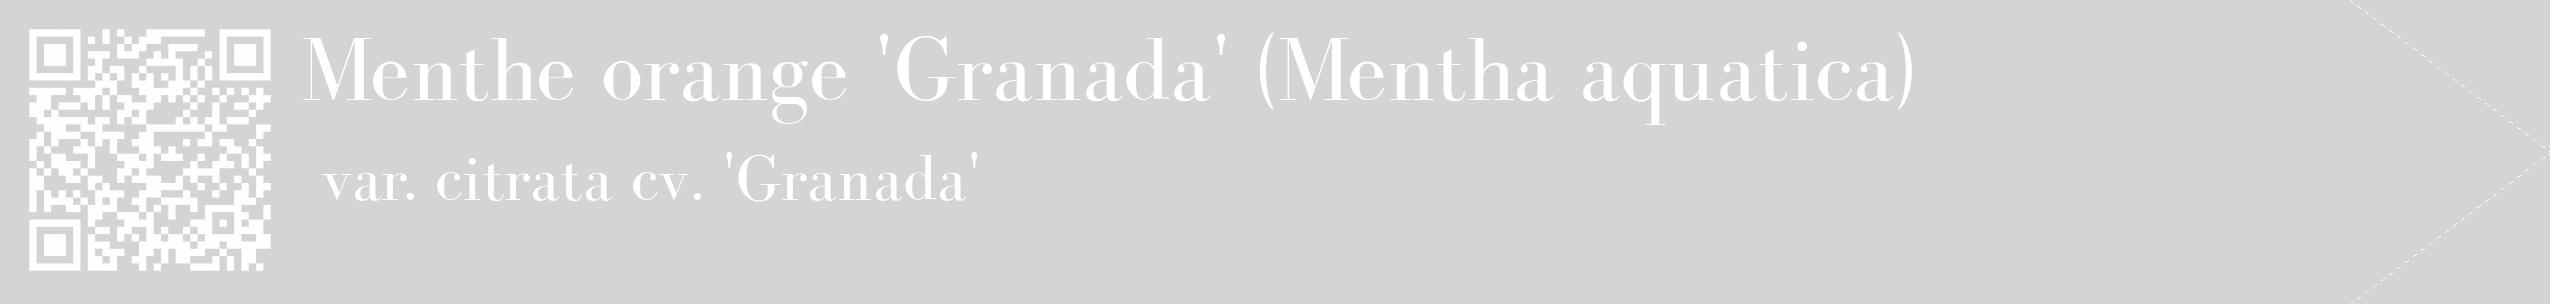 Étiquette de : Mentha aquatica var. citrata cv. 'Granada' - format c - style blanche40_simple_simplebod avec qrcode et comestibilité